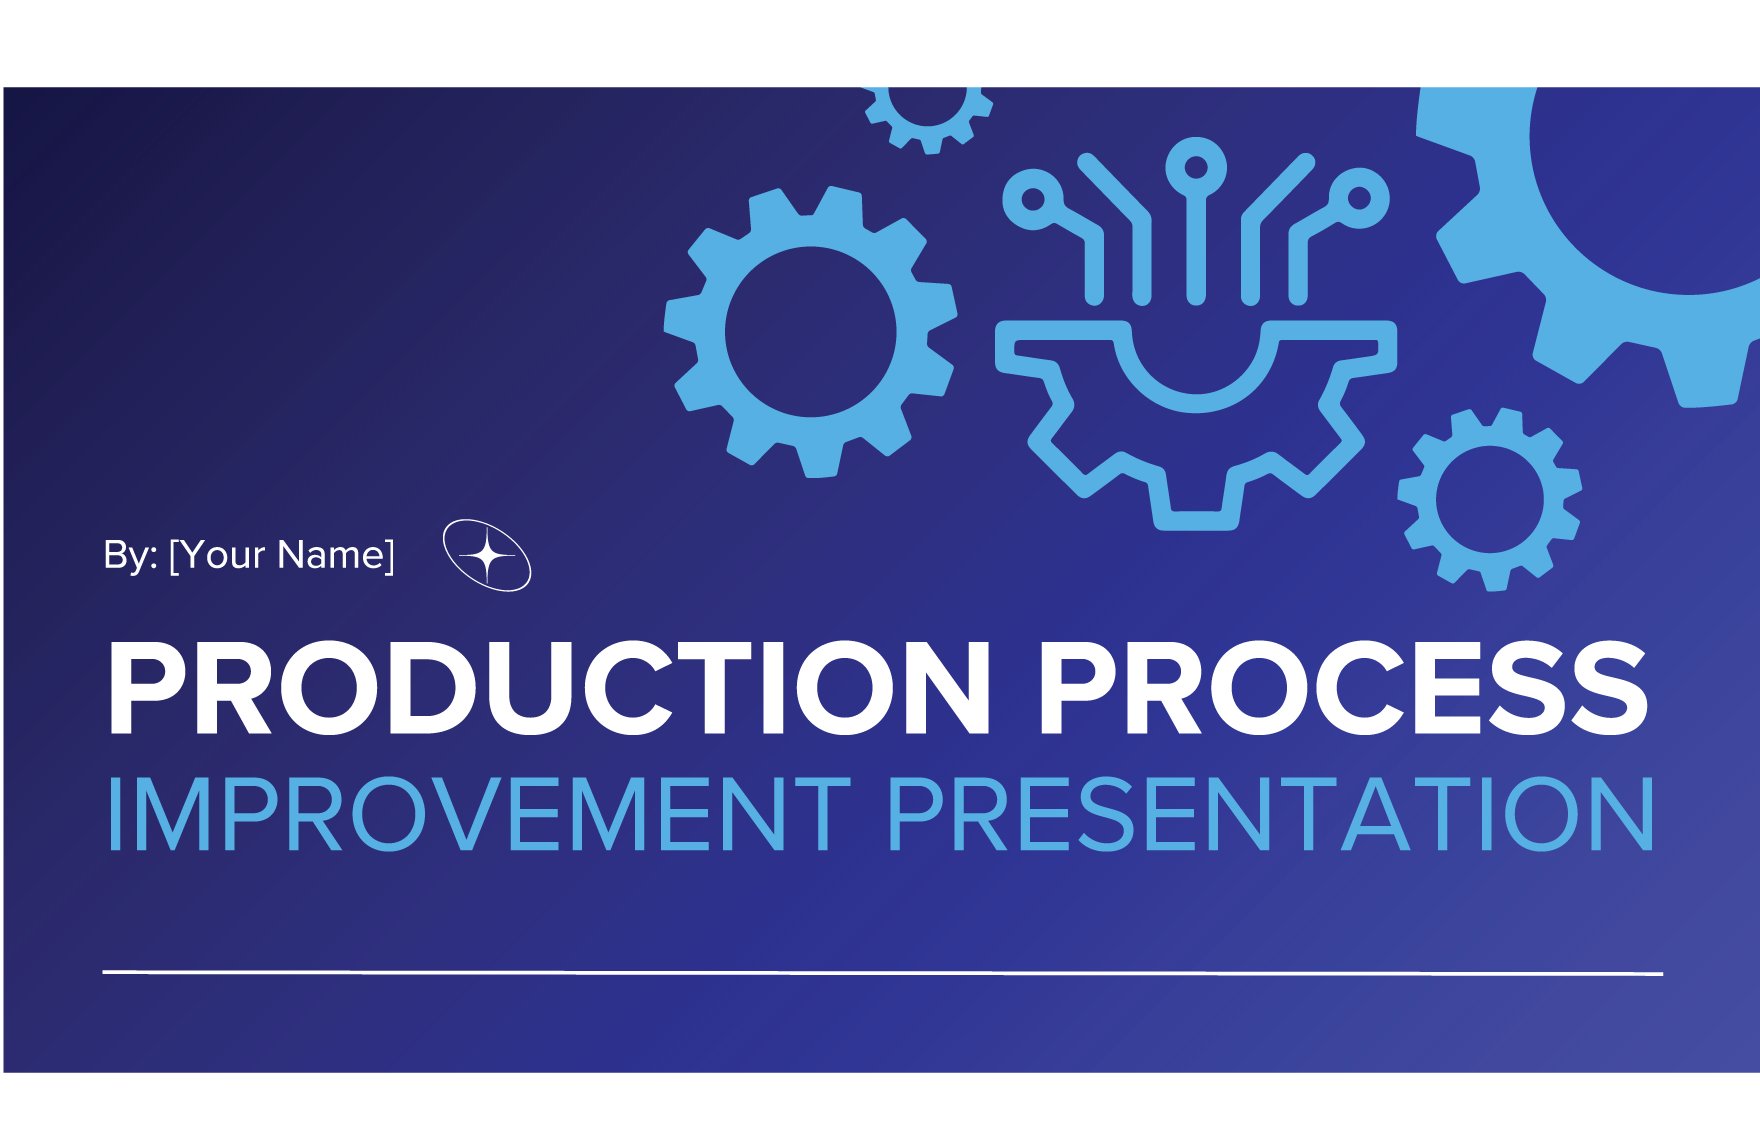 Production Process Improvement Presentation Template